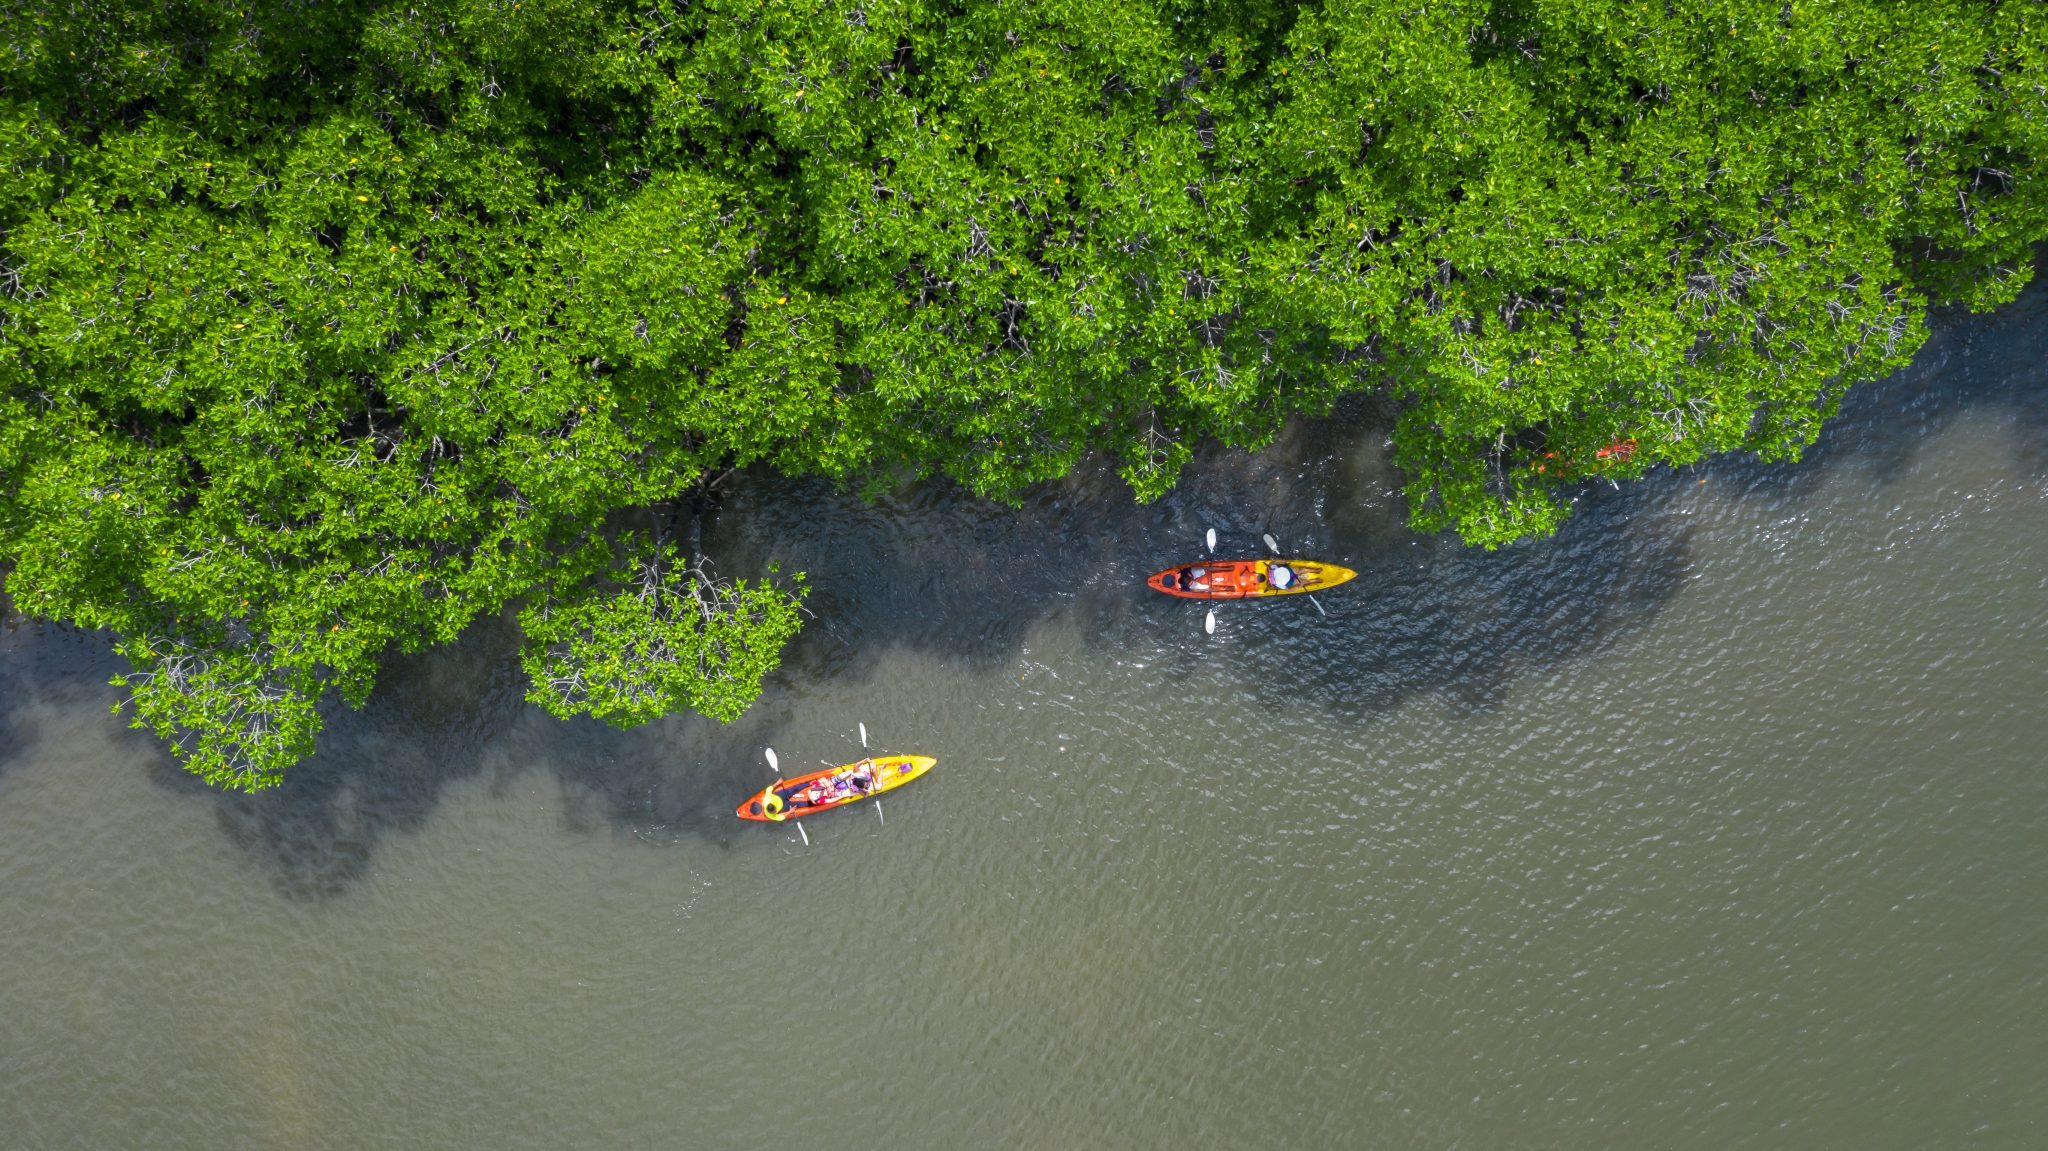 Sea kayaking through the mangrove forests of Ao Thalane, a fishing village in Krabi, Thailand.